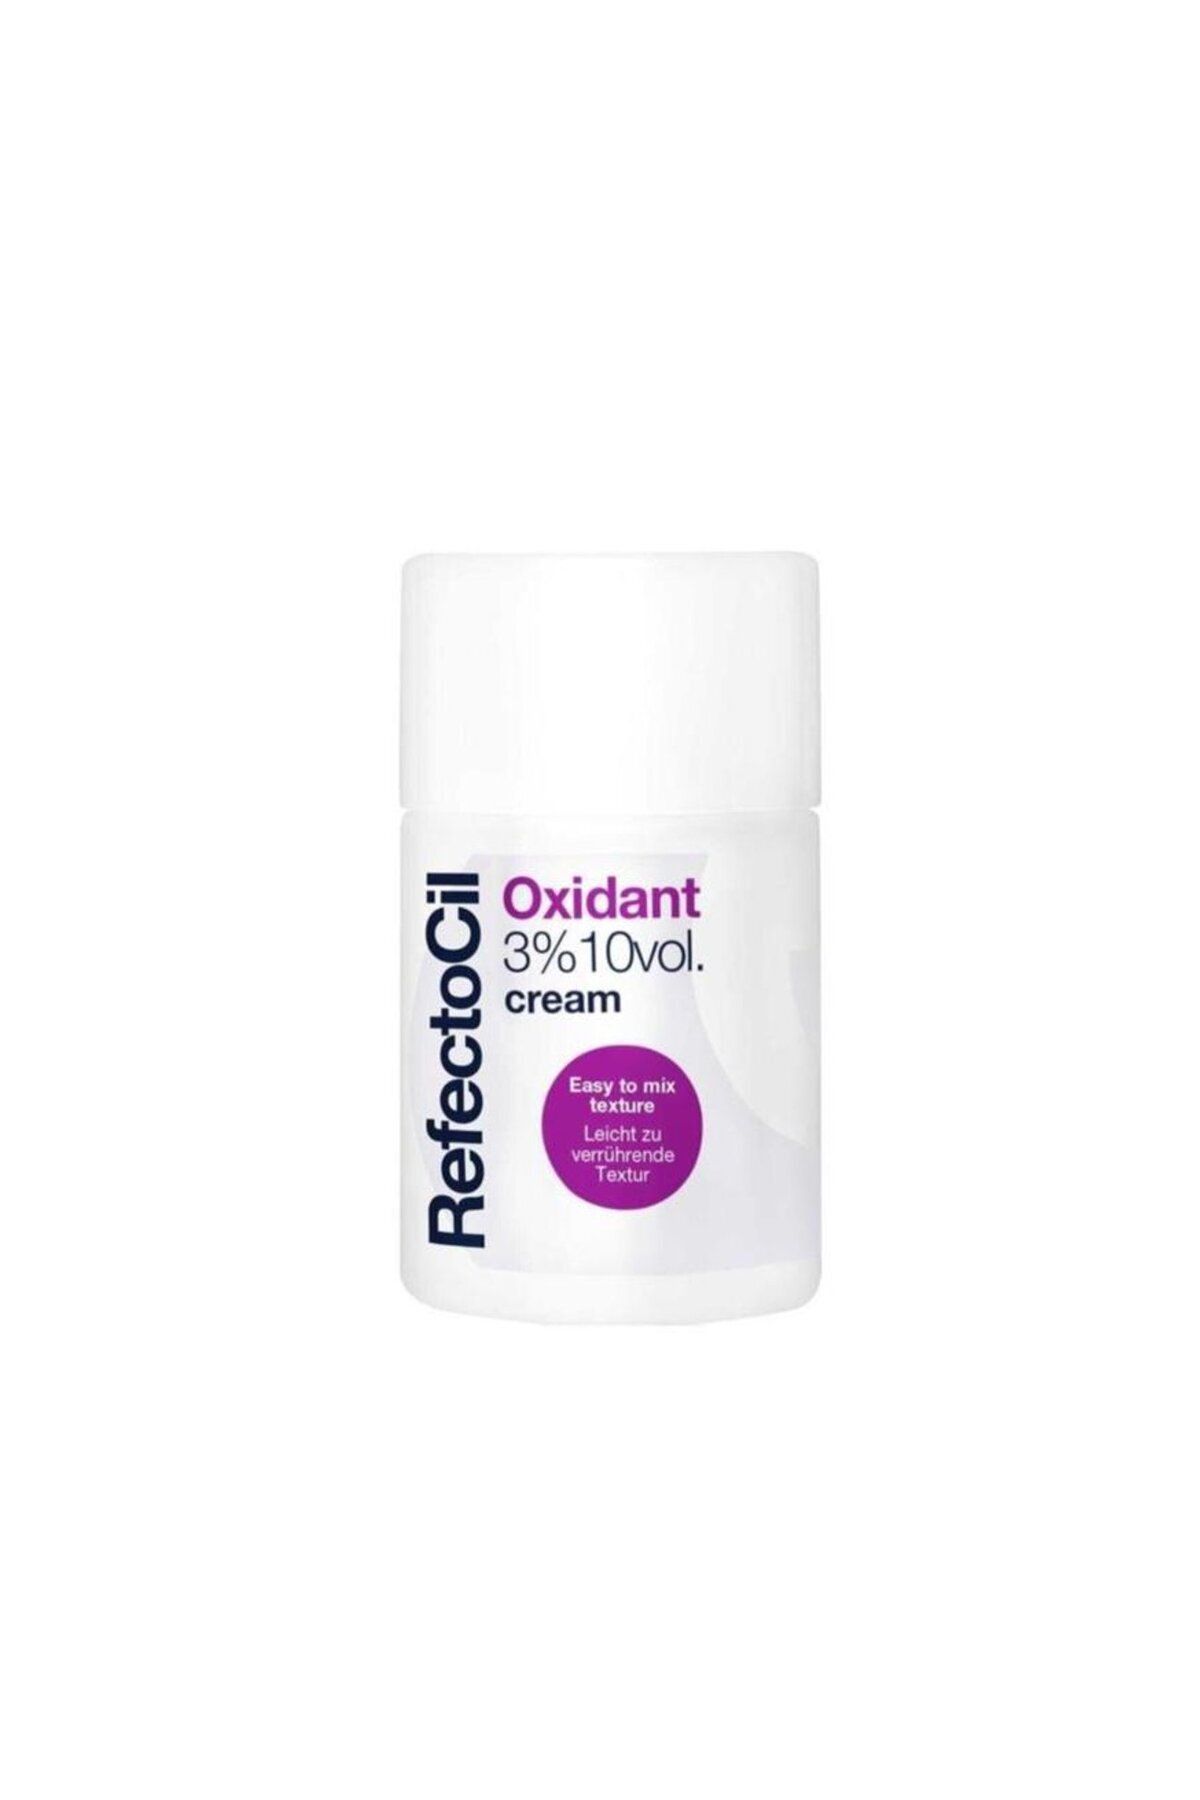 Refectocil Oxidant Cream %3 10 vol. Krem Oksidan 100ml